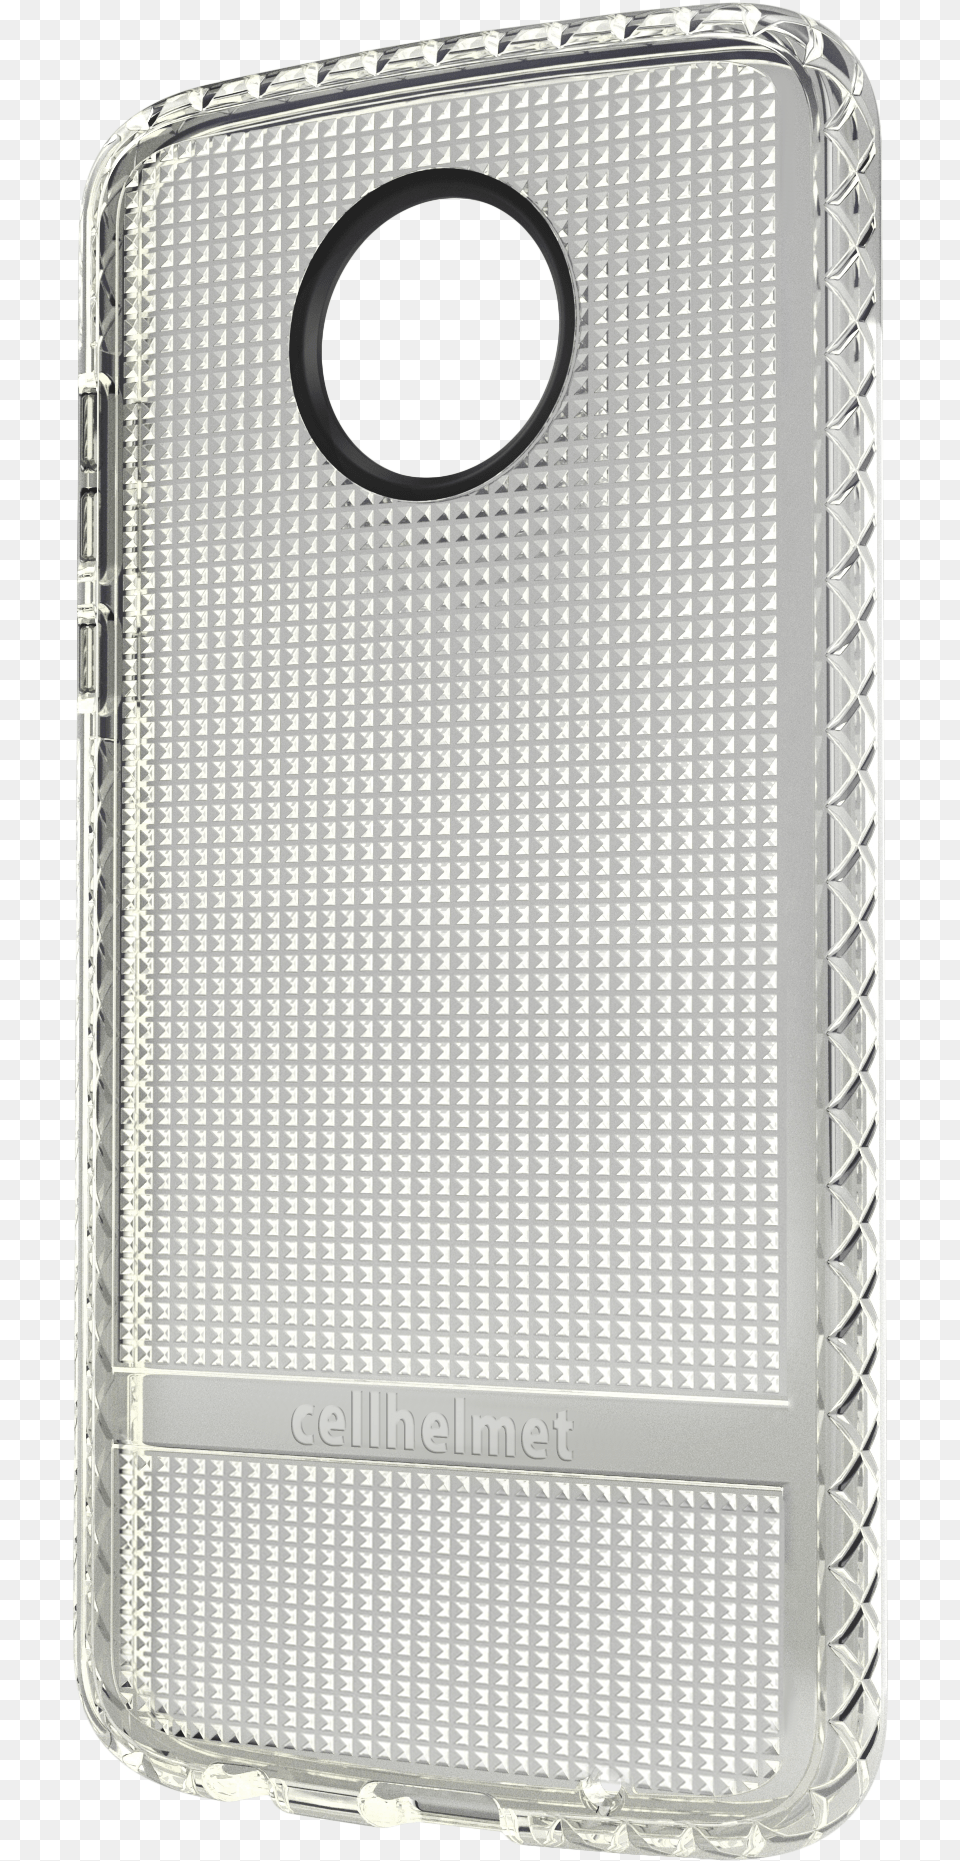 Cellhelmet Altitude X Clear Case For Motorola Moto Cellhelmet, Electronics, Mobile Phone, Phone Png Image